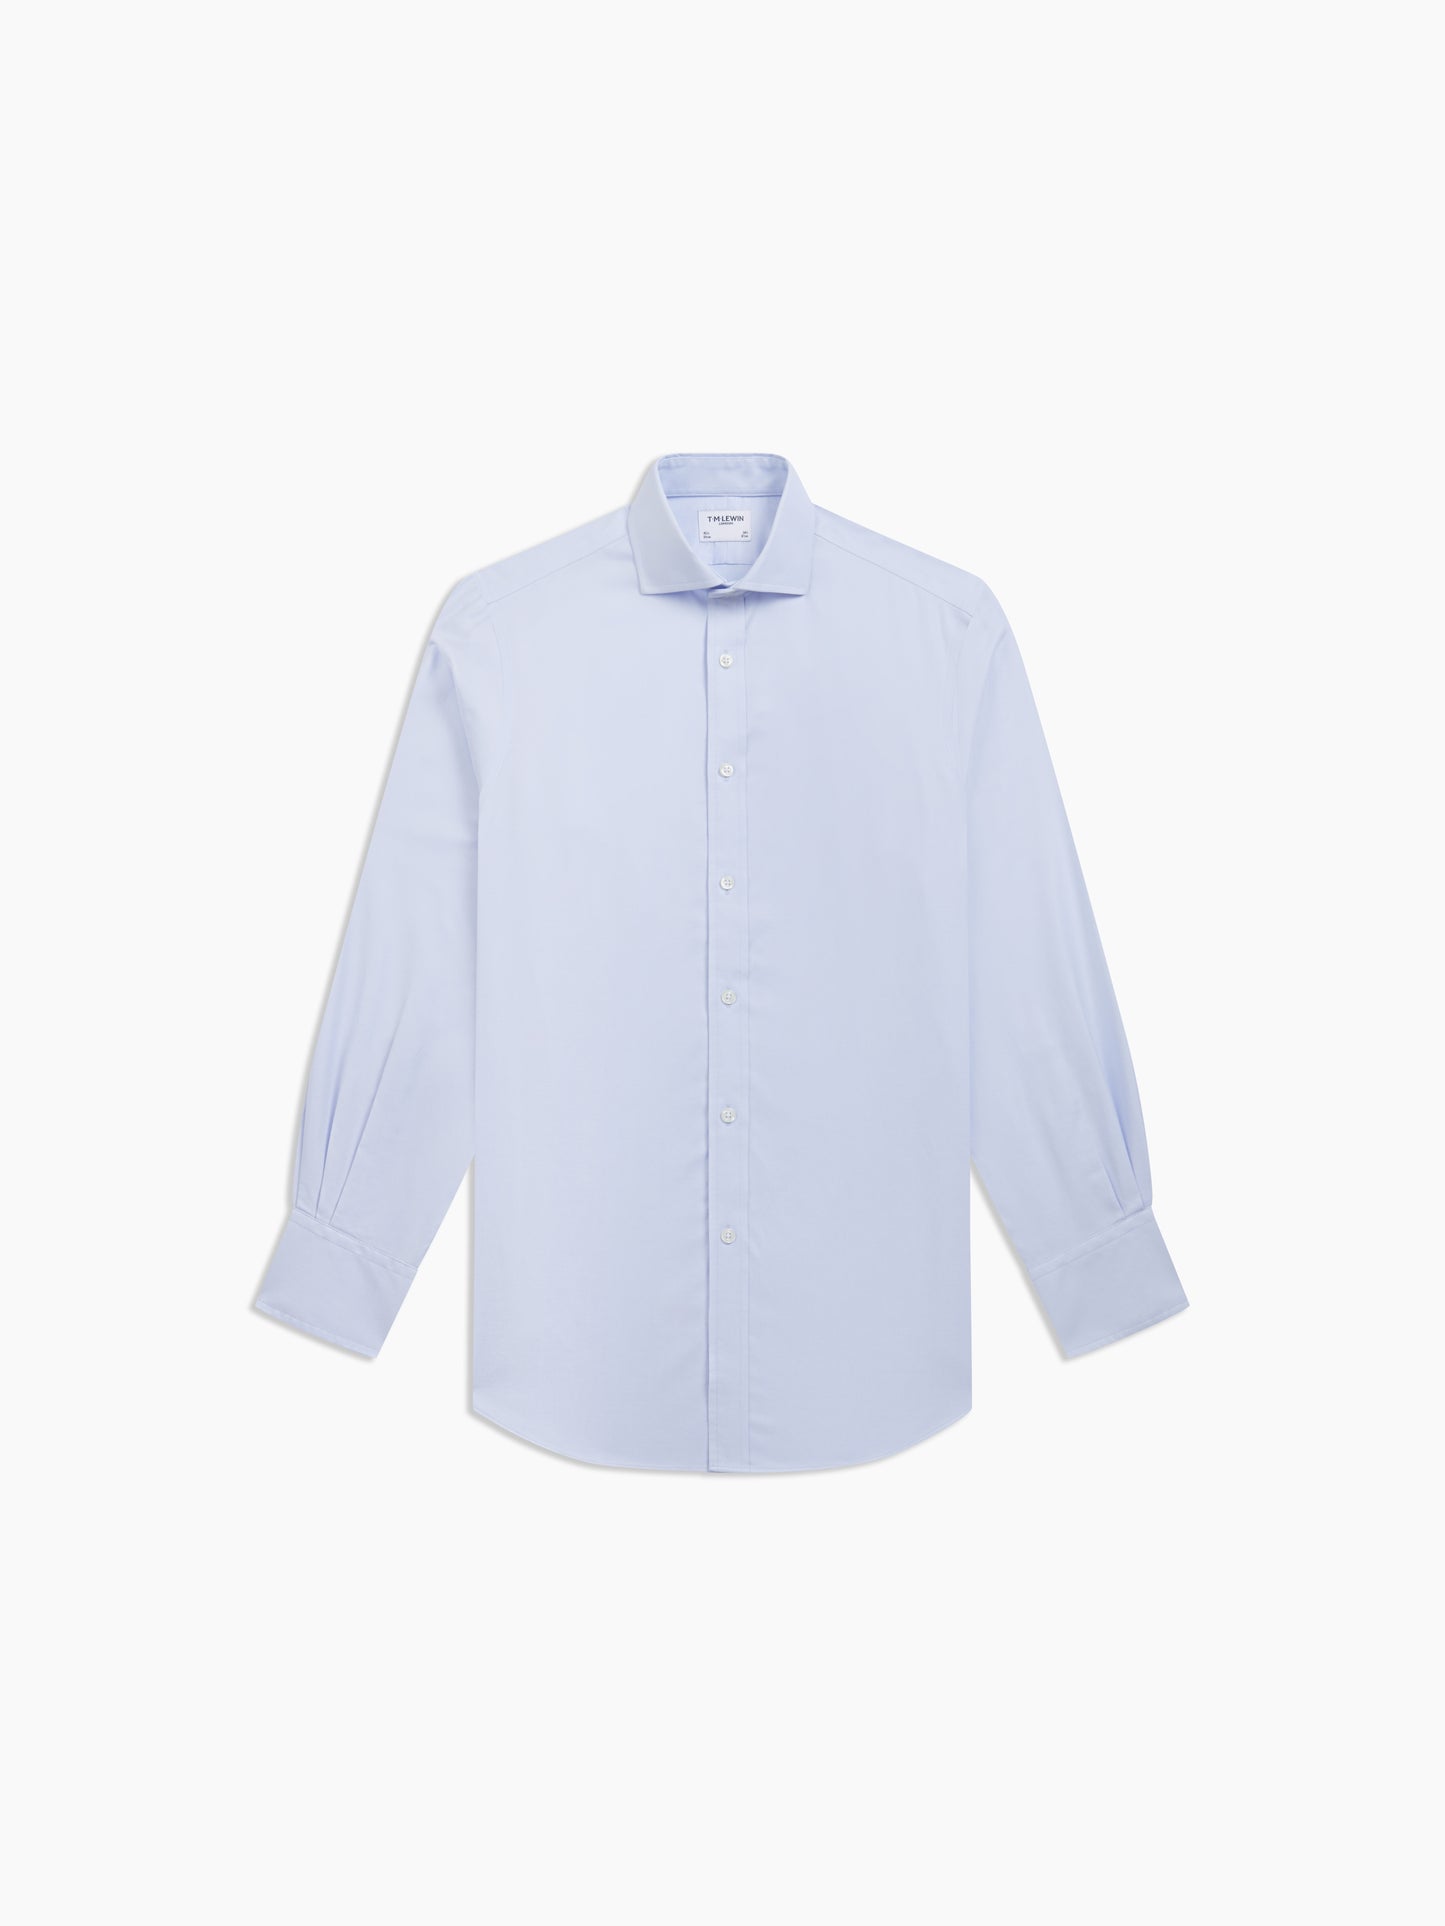 Image 2 of Non-Iron Sky Blue Plain Oxford Fitted Single Cuff Semi Cutaway Collar Shirt